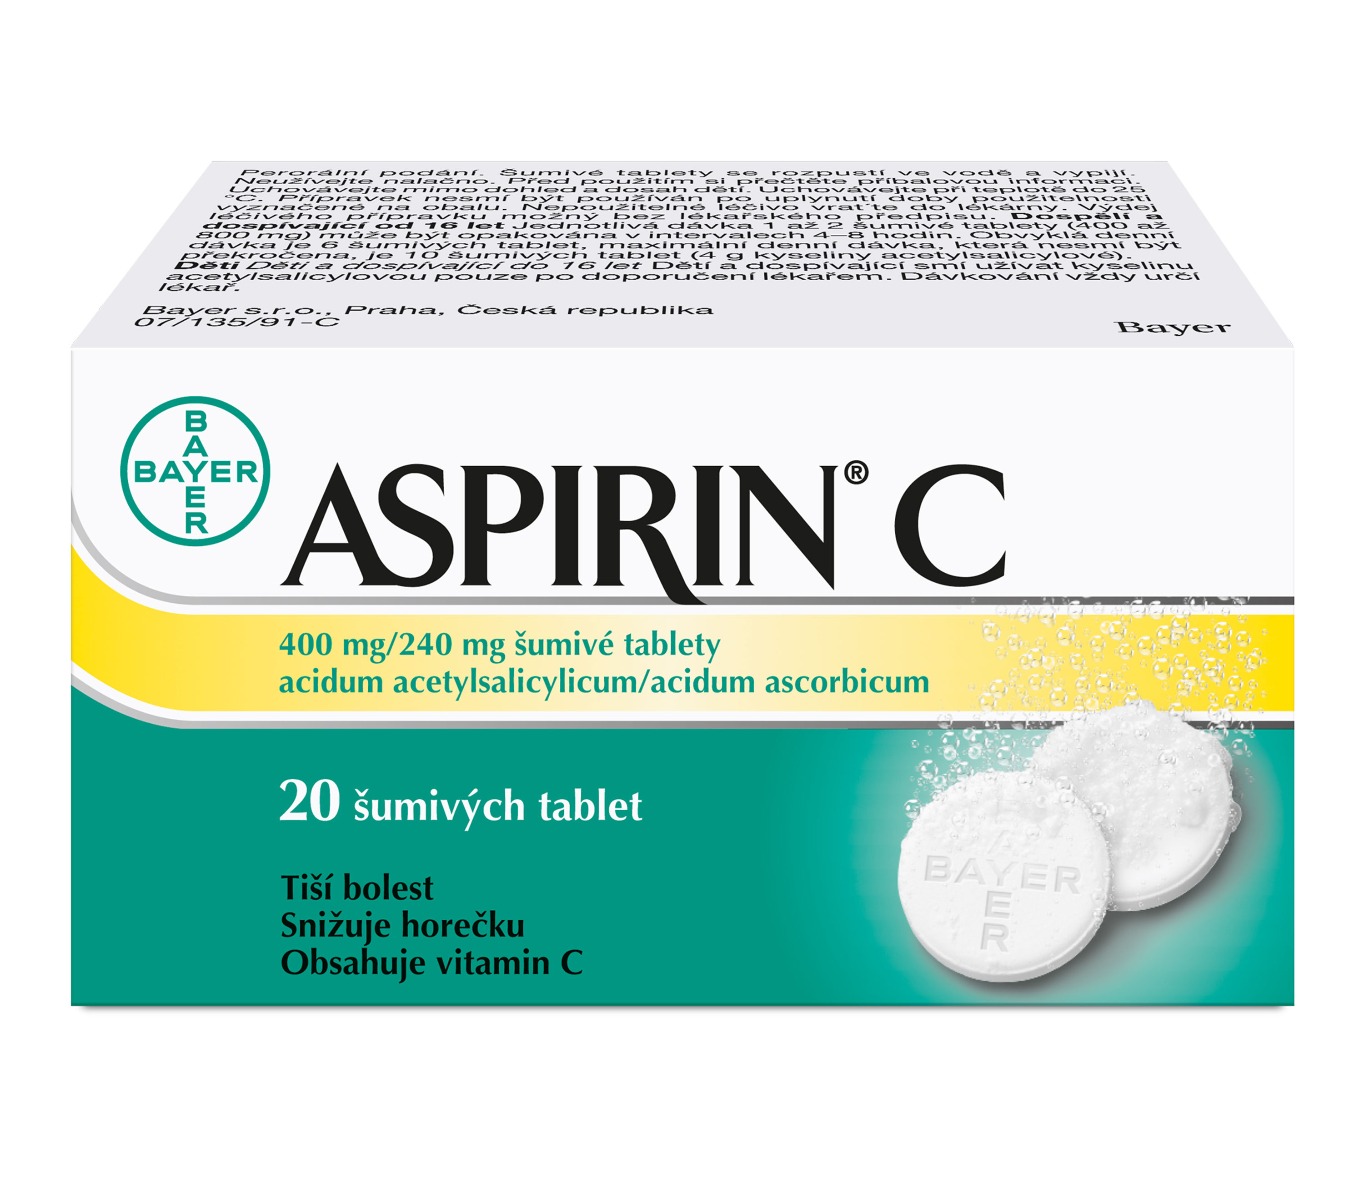 Aspirin C 20 šumivých tablet Aspirin